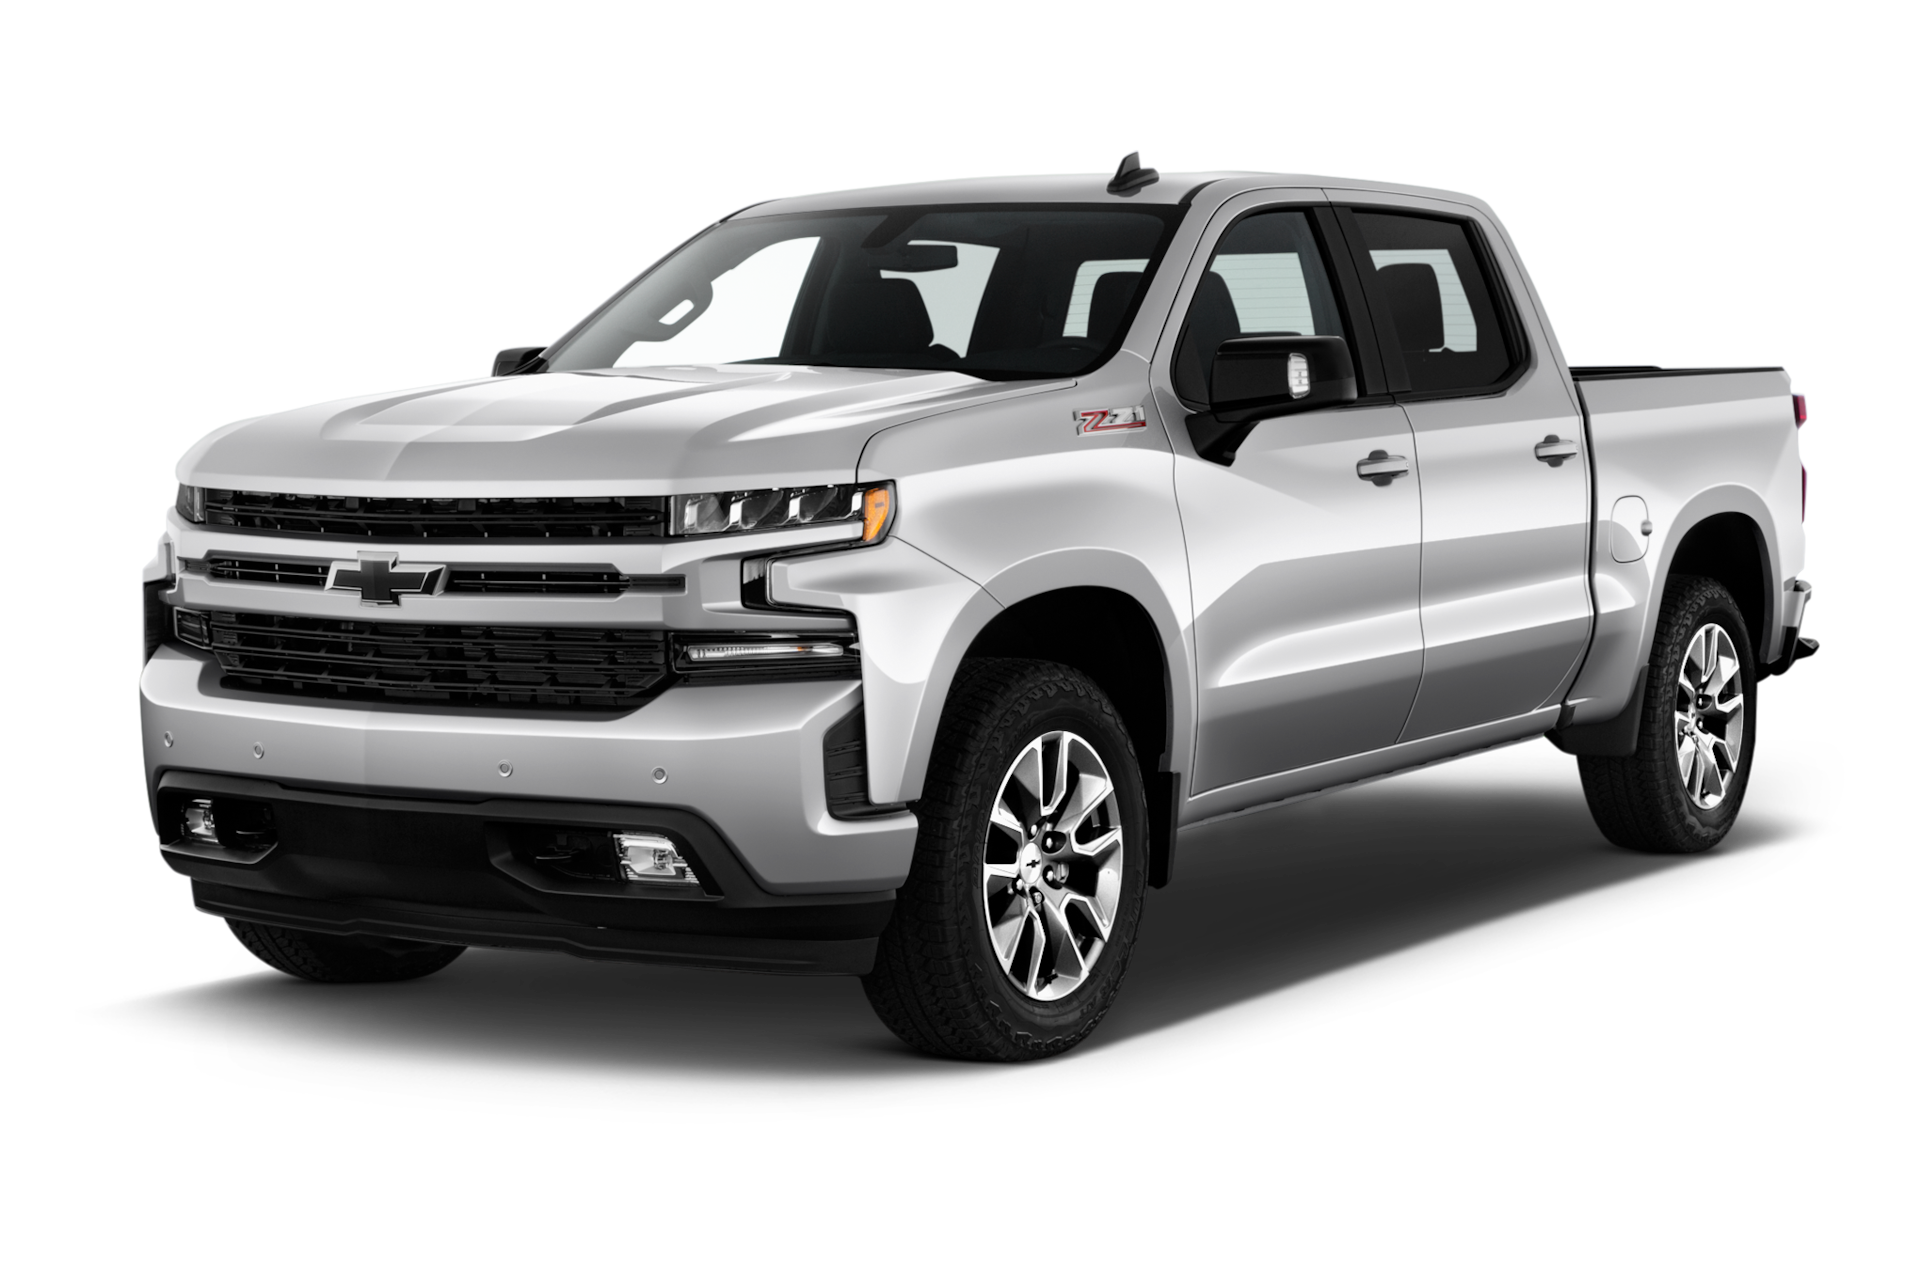 2019 Chevrolet Silverado 1500 Prices, Reviews, and Photos - MotorTrend